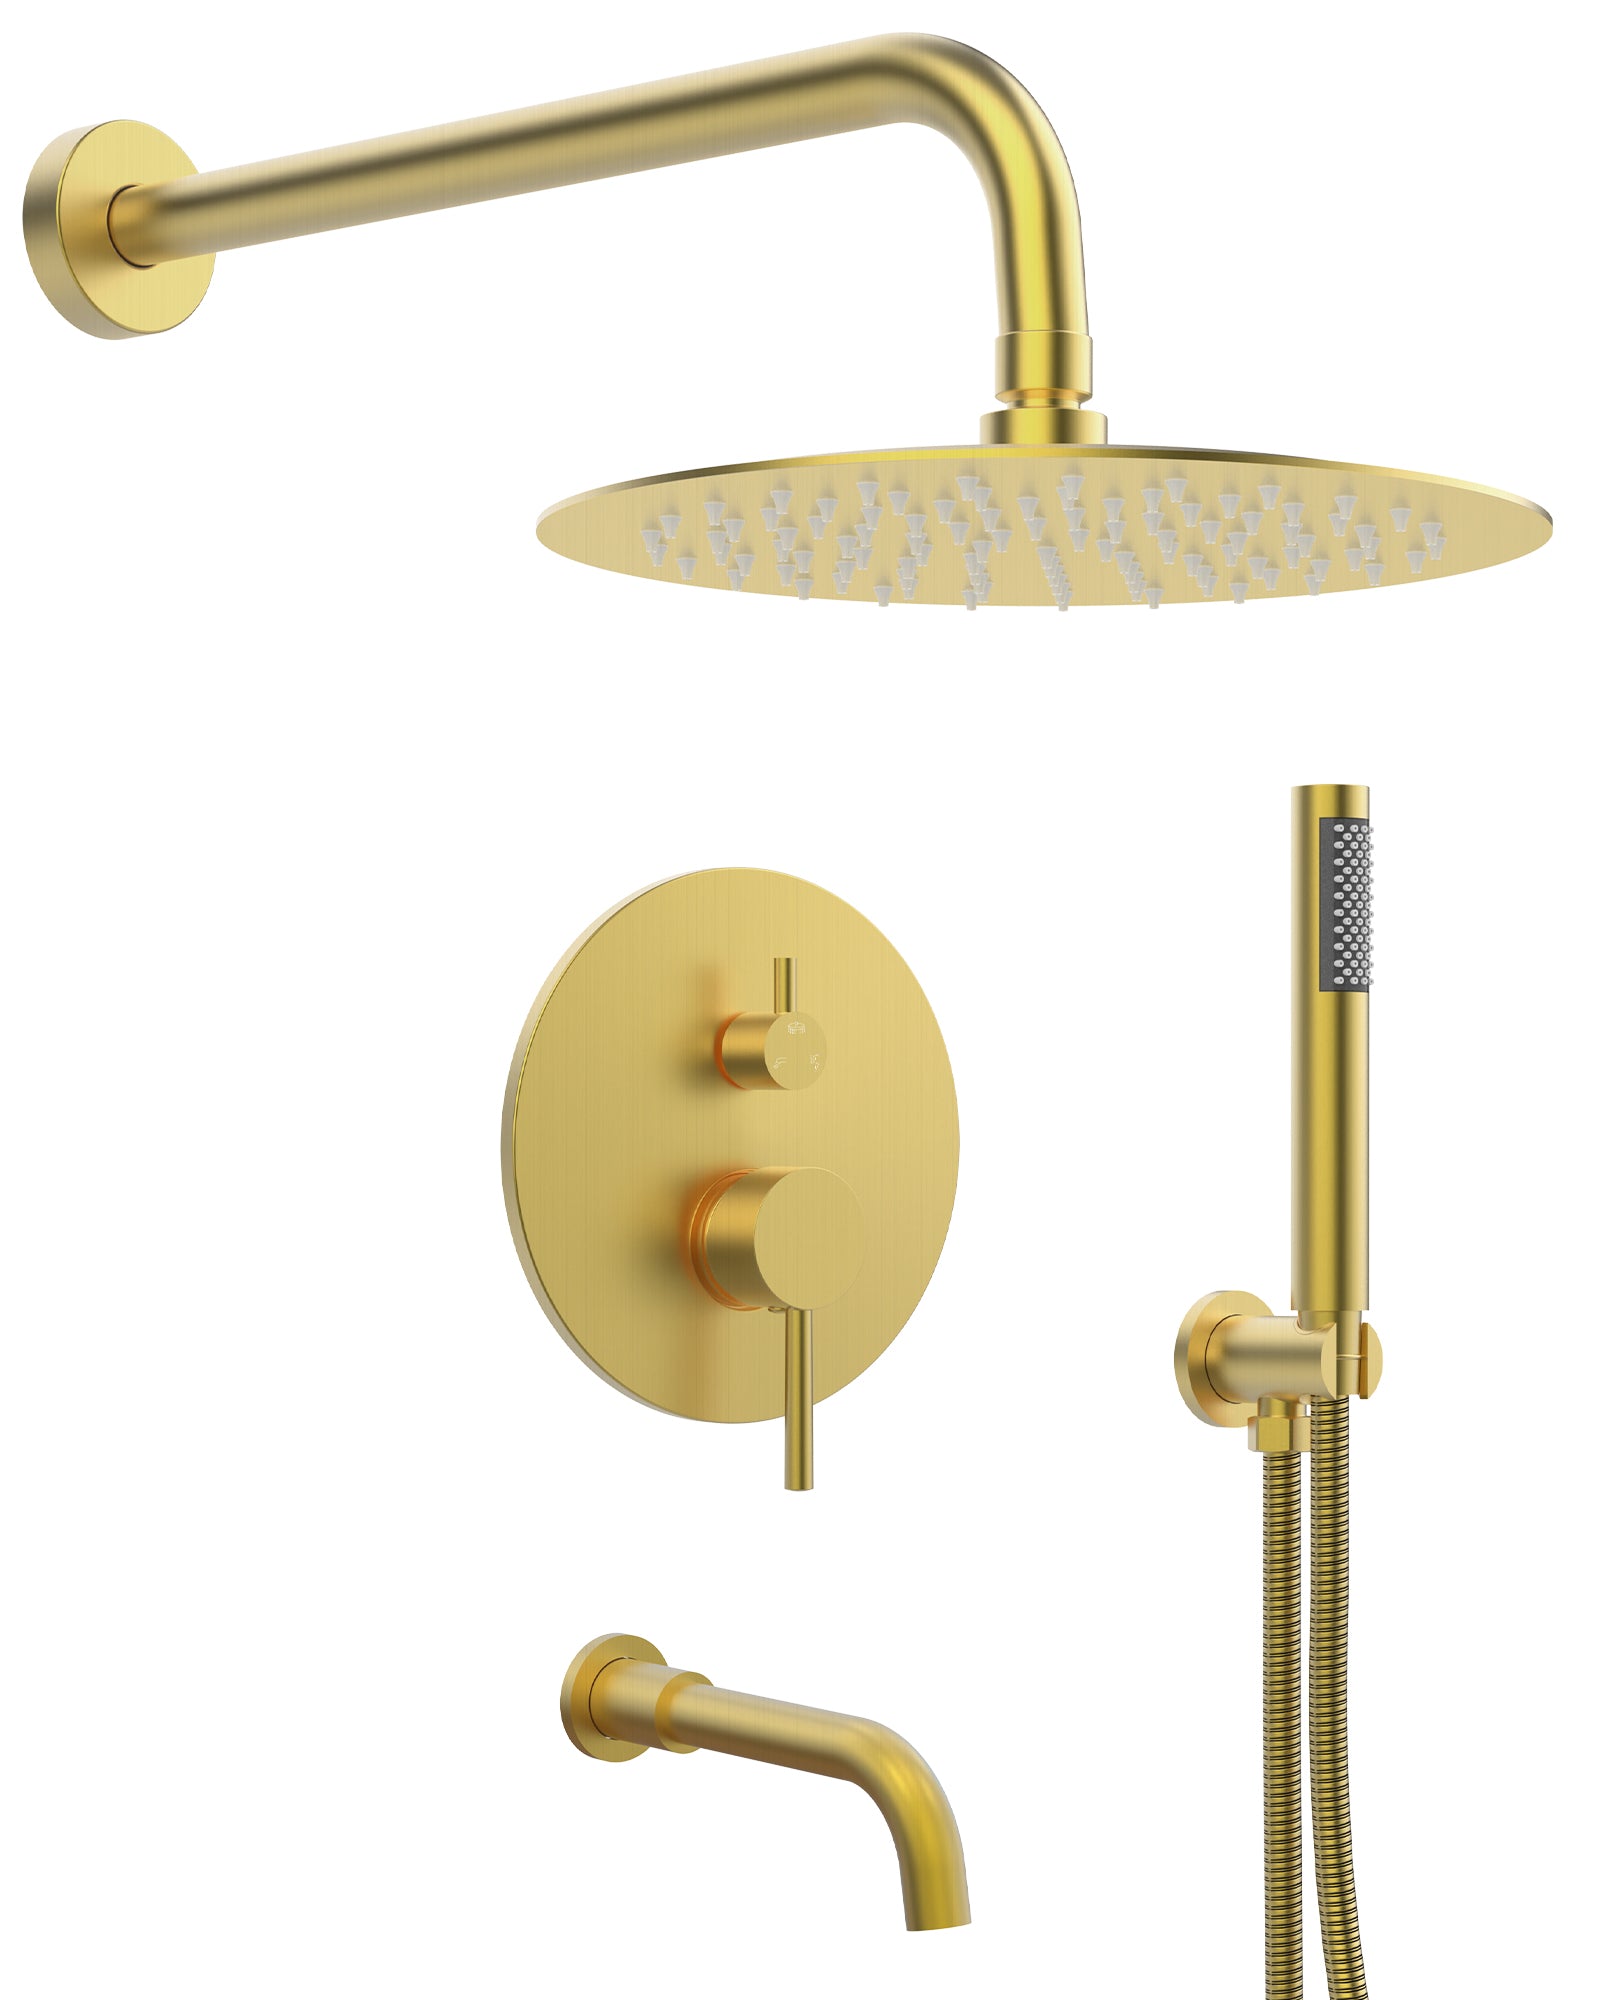 EVERSTEIN Luxury Gold Bathroom Shower System with 10" Ceiling Head & Handheld Spray - High-Pressure Waterfall Bathtub Faucet